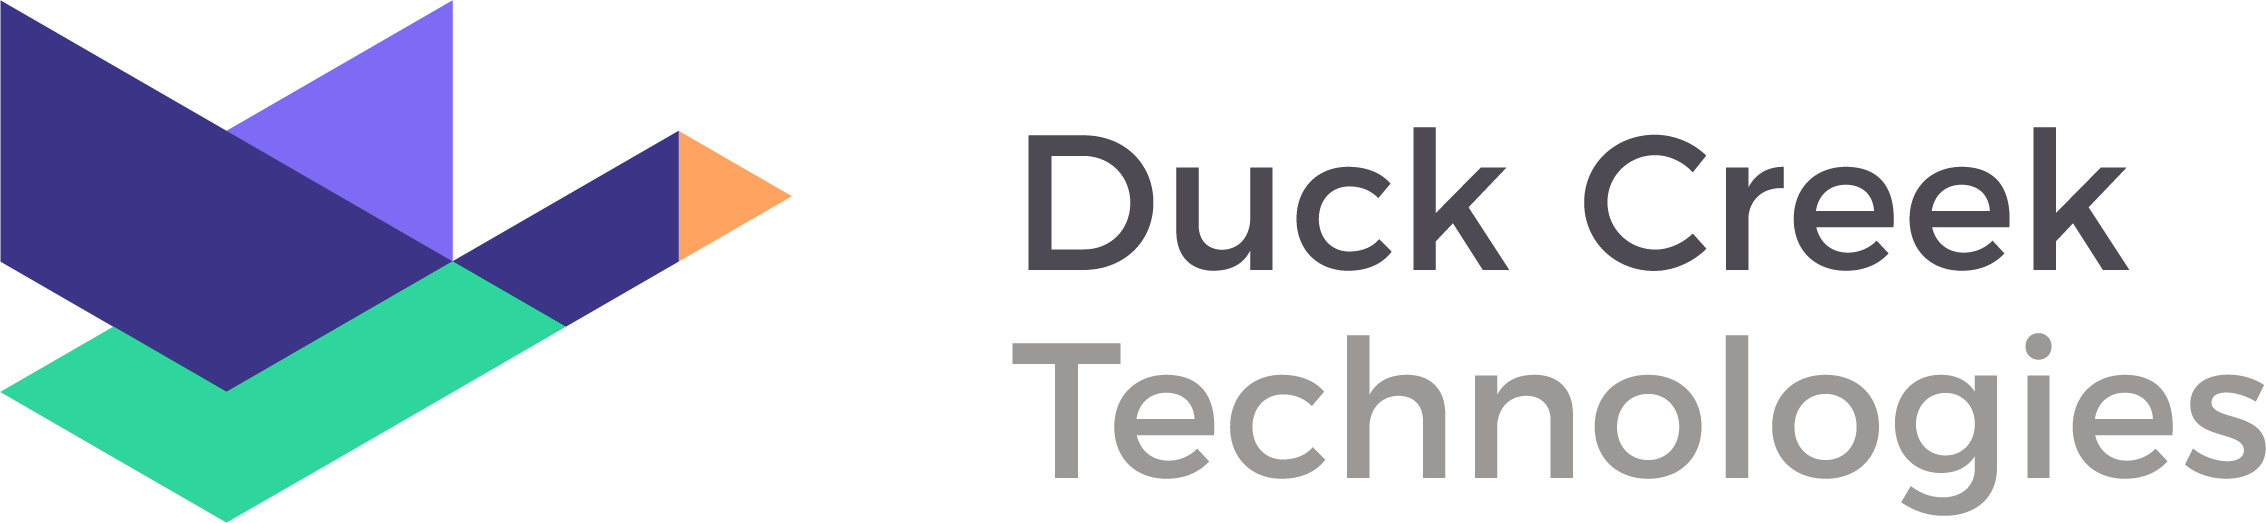 Duck Creek Technolog